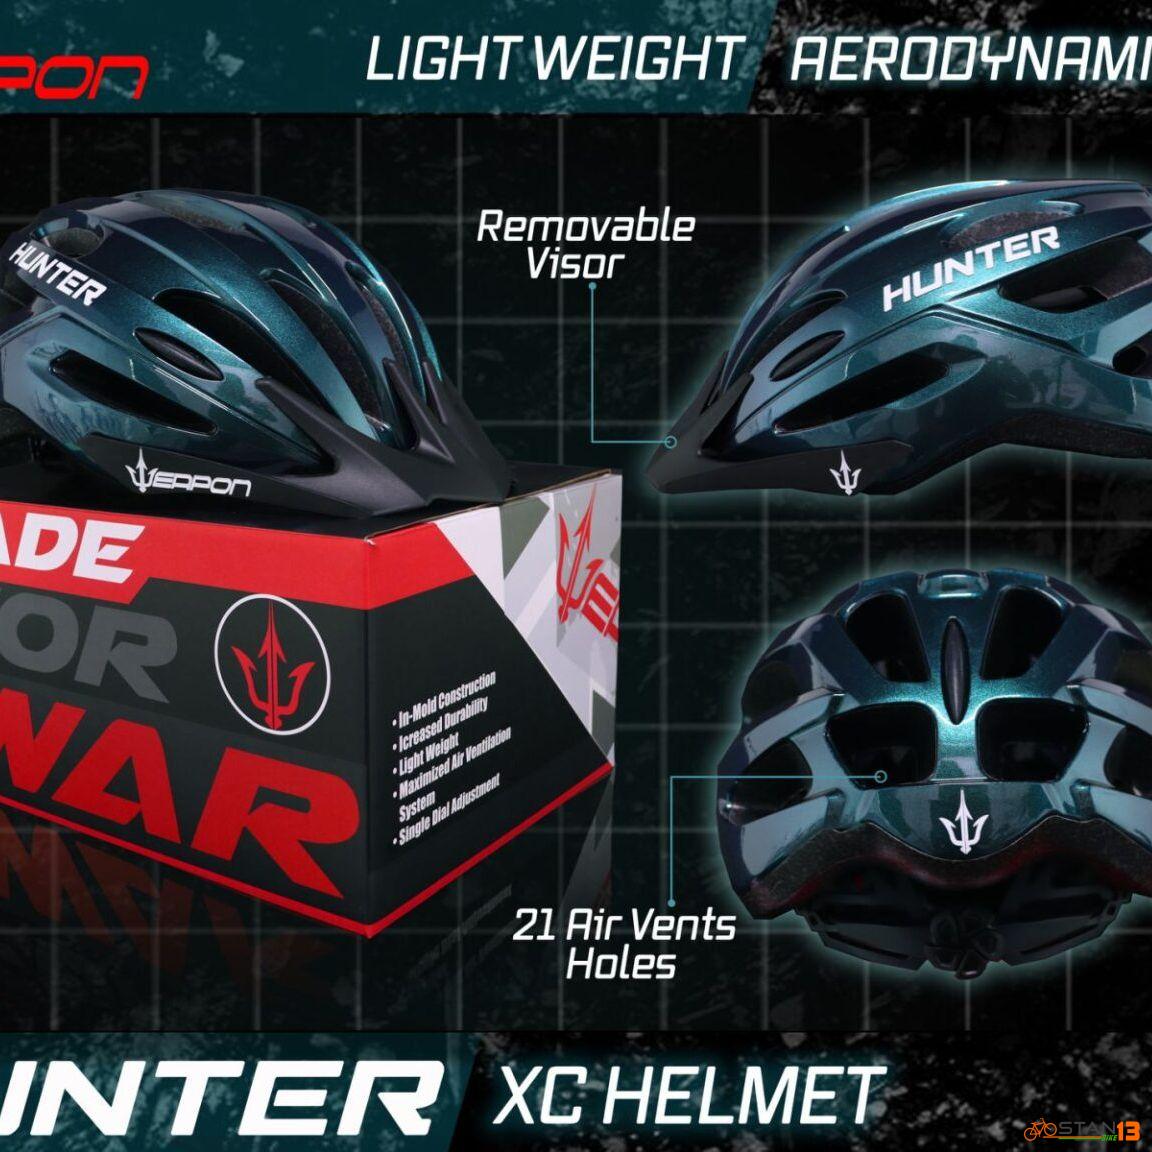 Helmet Weapon Hunter XC Racing Helmet used by Weapon XC Athlete